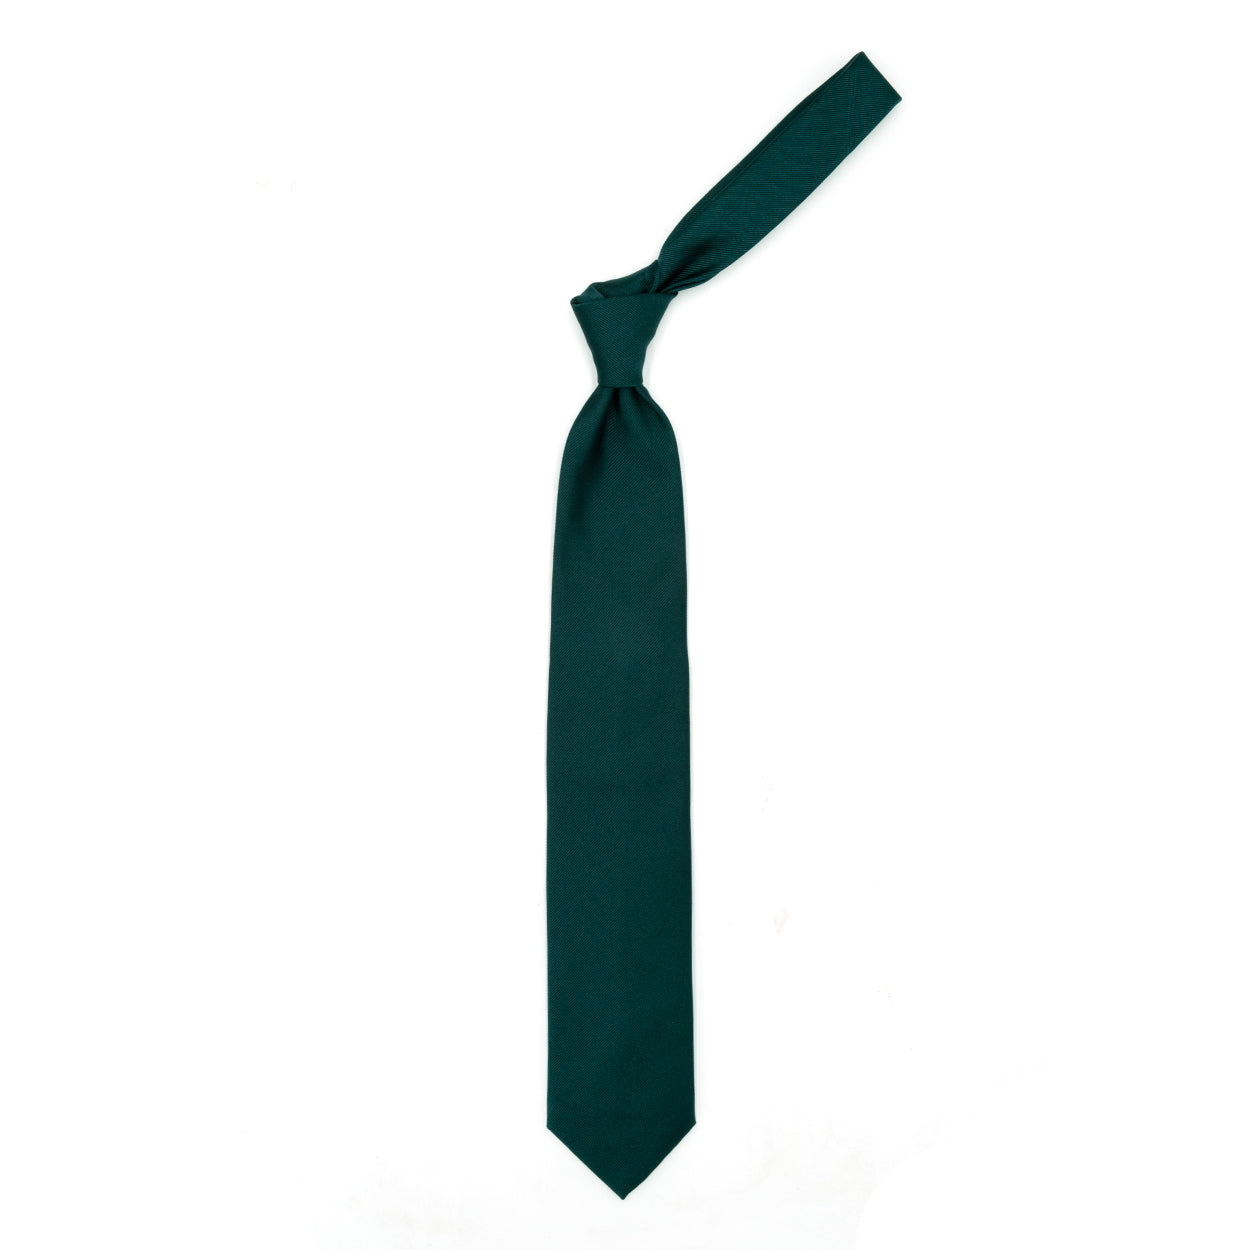 Solid green tie